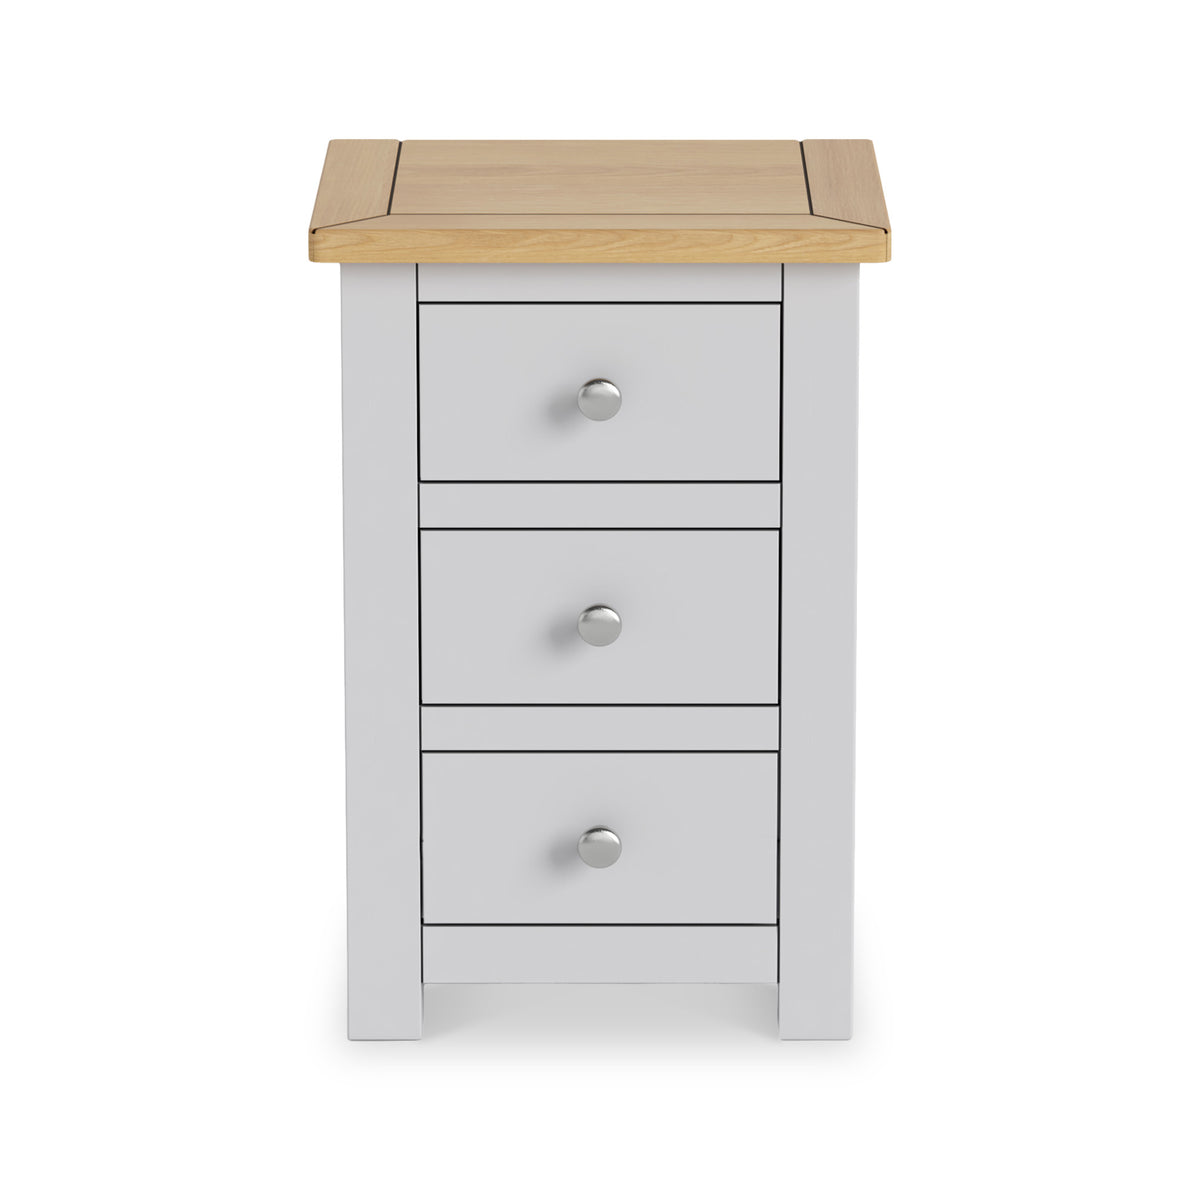 Duchy Inox Grey 3 Drawer Bedside Cabinet with Oak Top